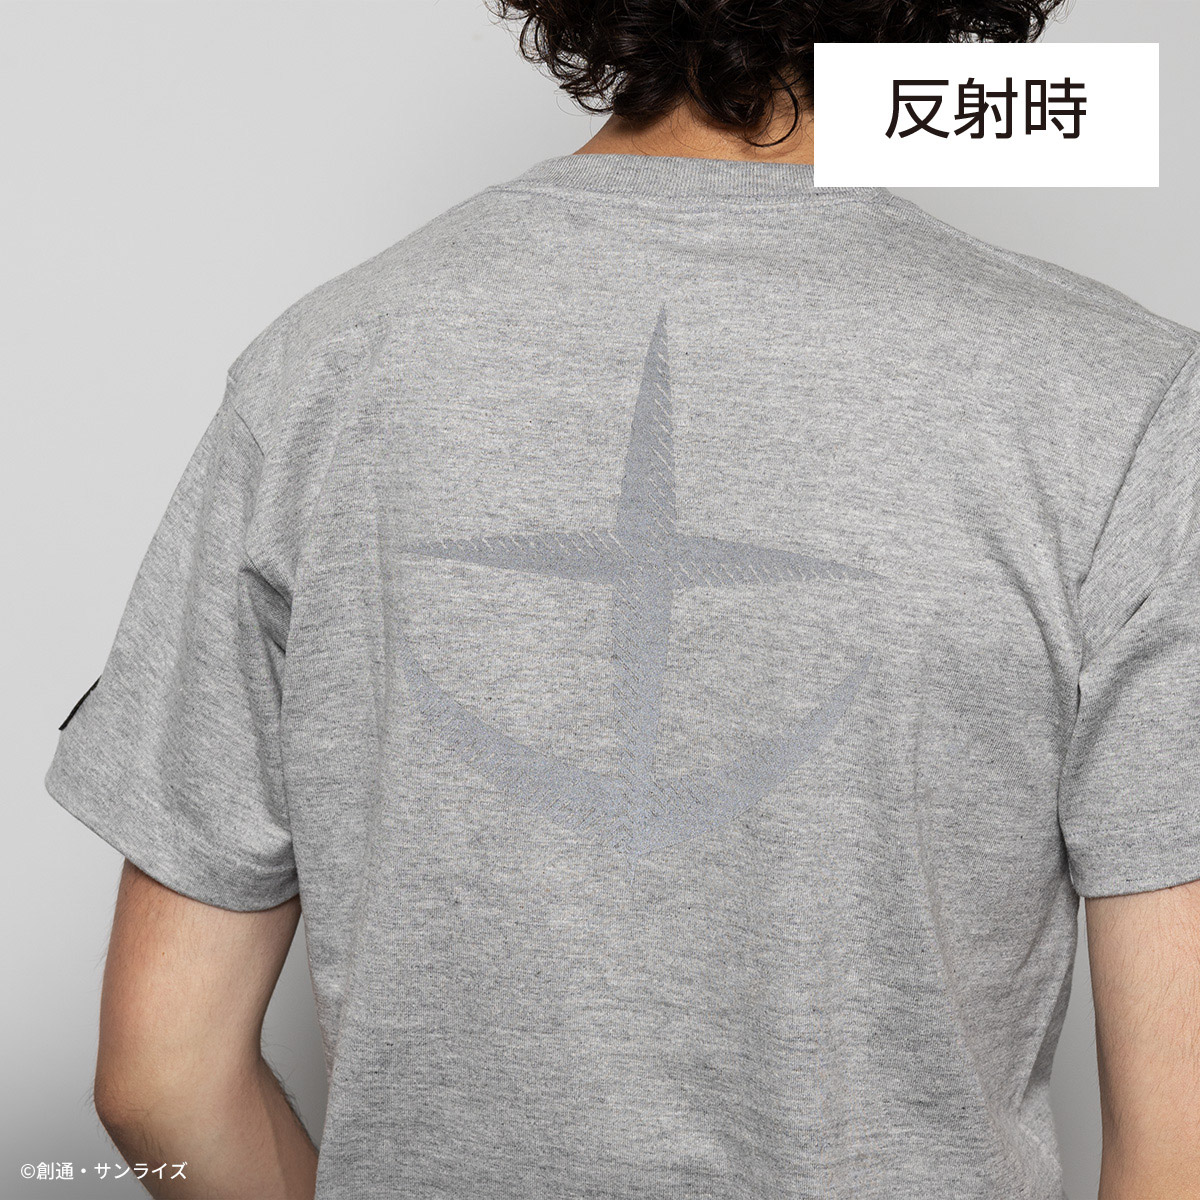 STRICT-G.ARMS『機動戦士ガンダム』半袖Tシャツ リフレクタープリント E.F.S.F.